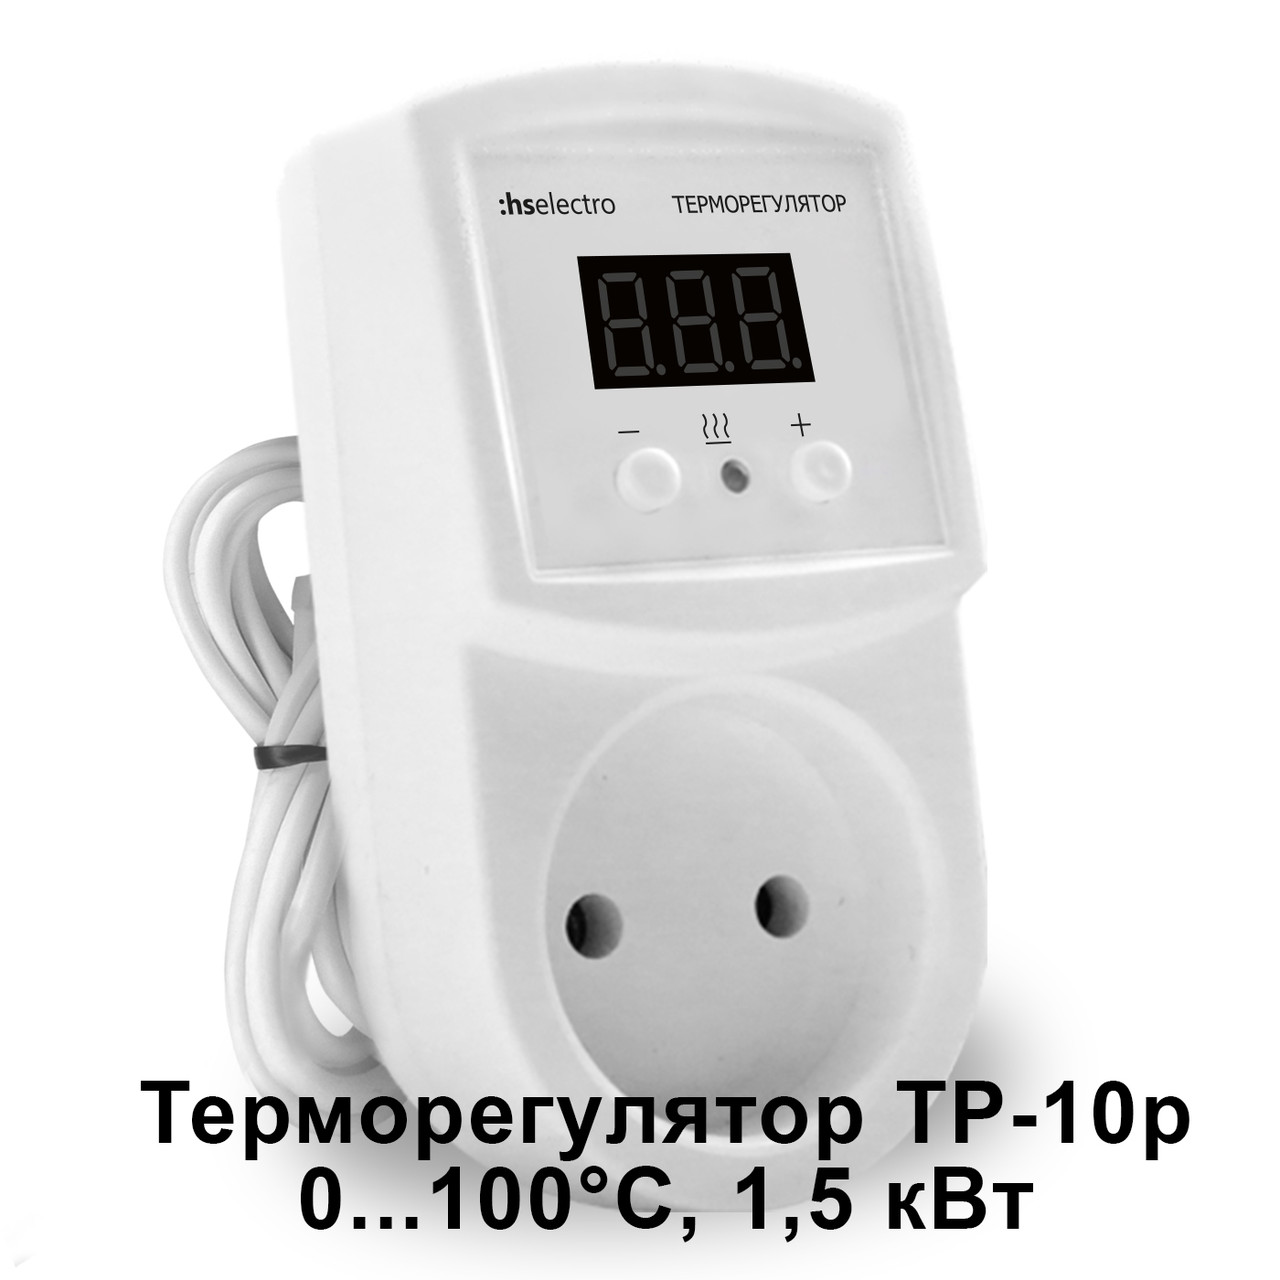 Терморегулятор ТР-10р (0...100°C, 1,5 кВт)